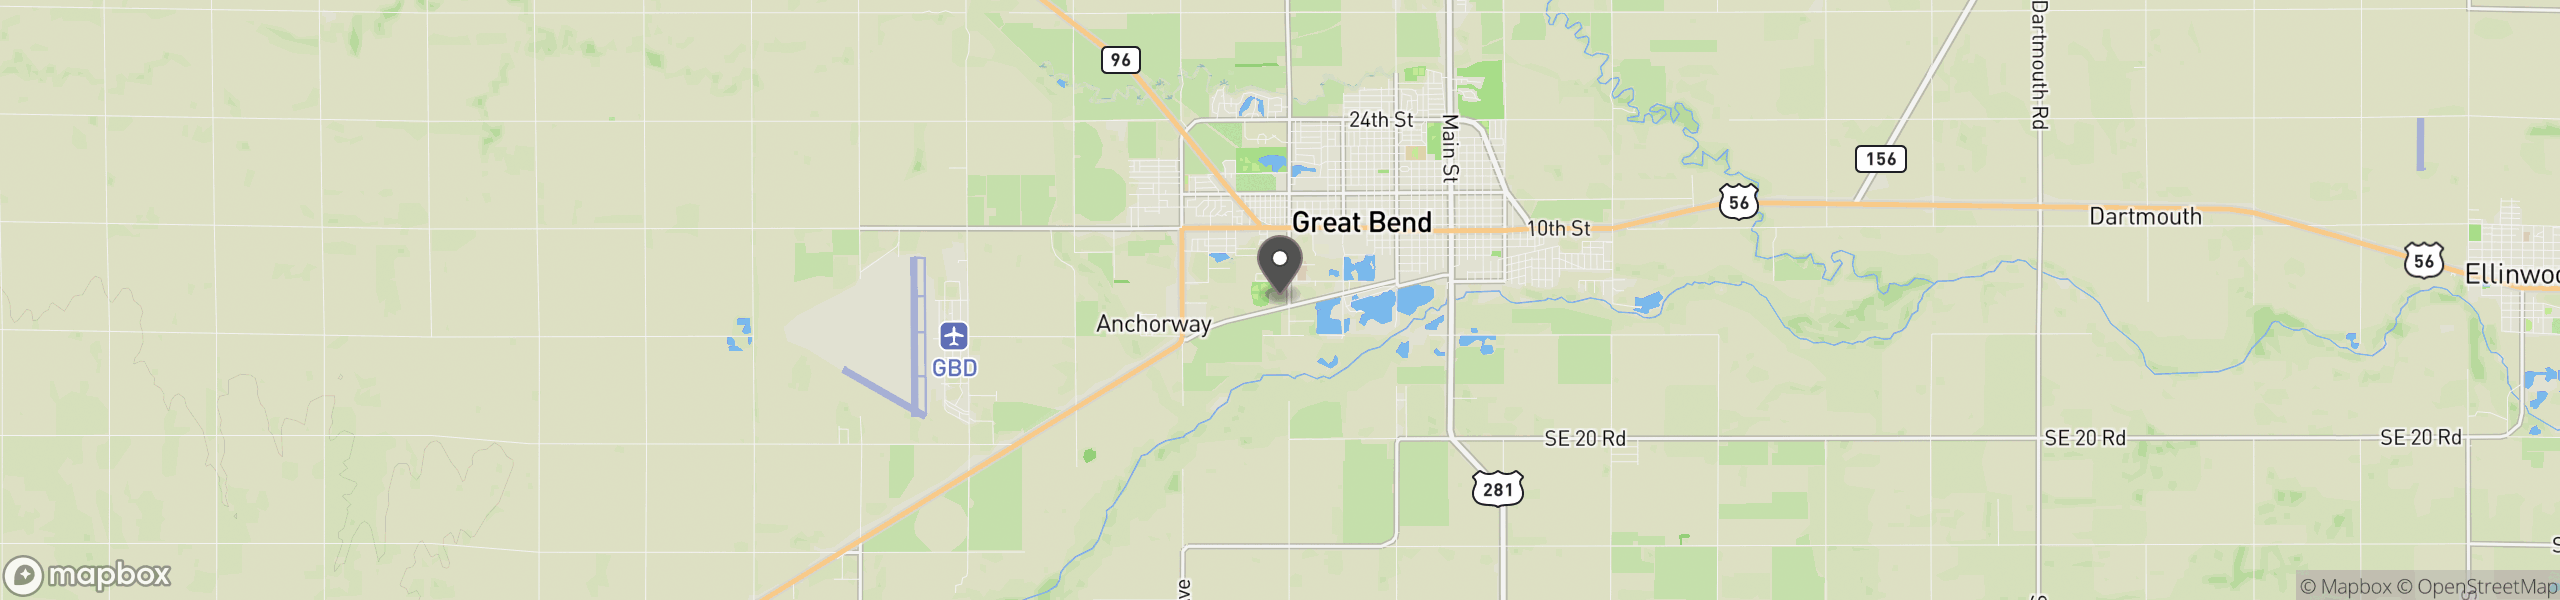 Great Bend, KS